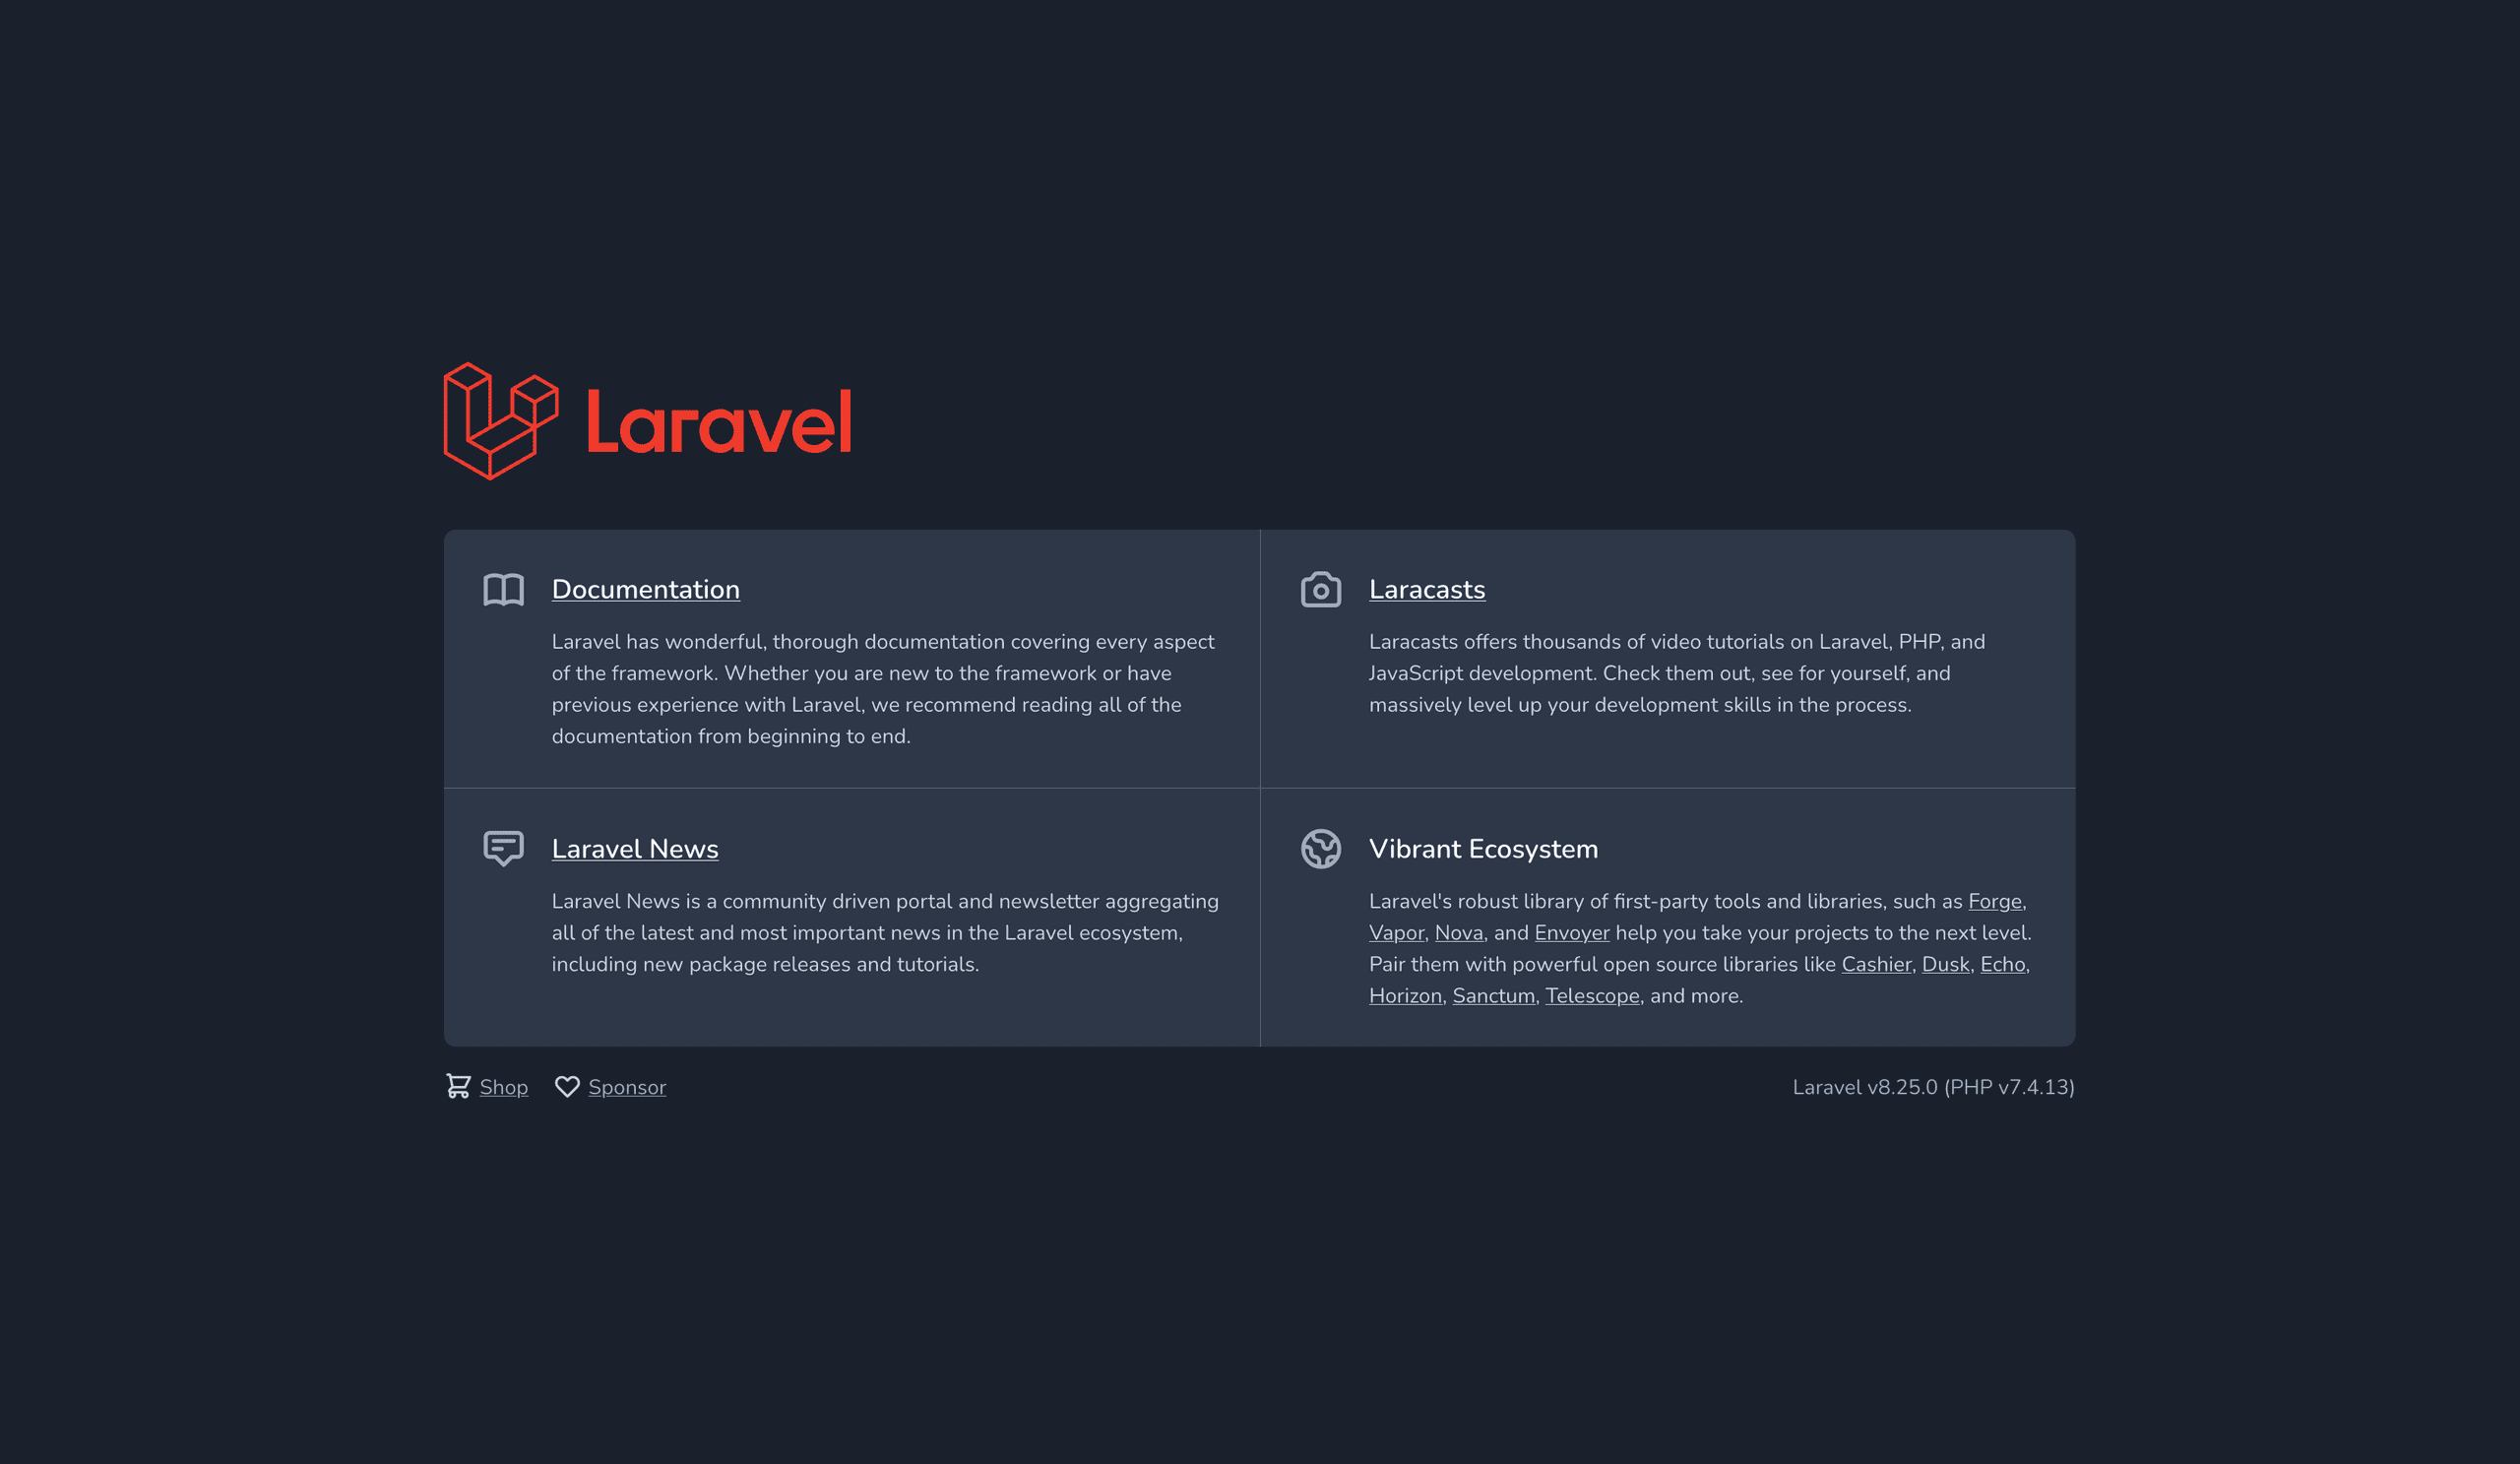 Laravel App